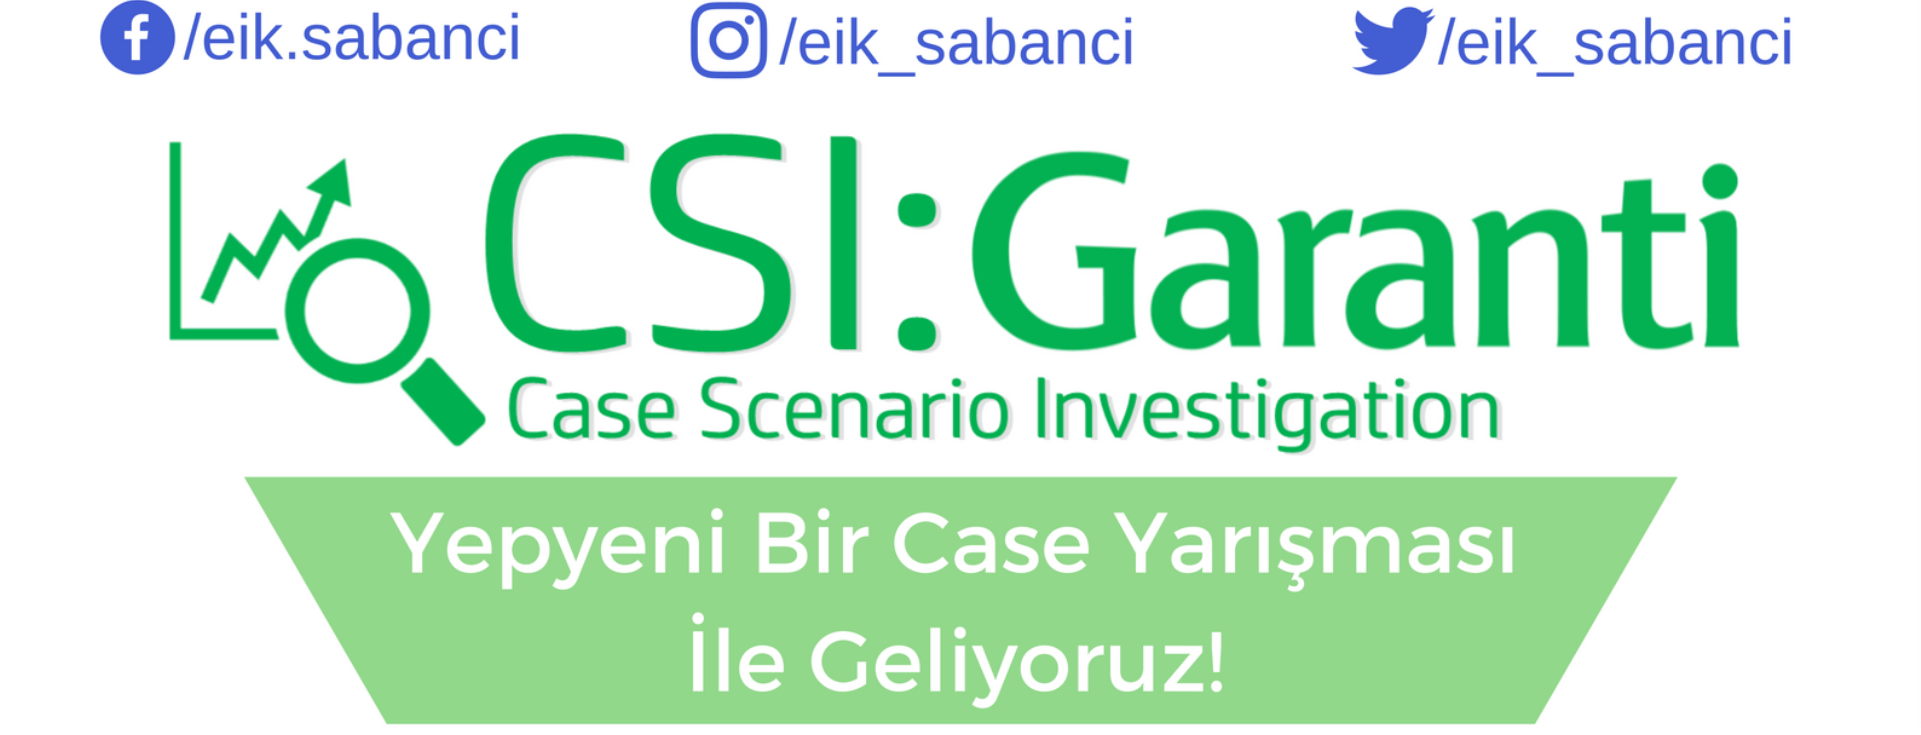 Case Scenario İnvestigation Garanti Başladı